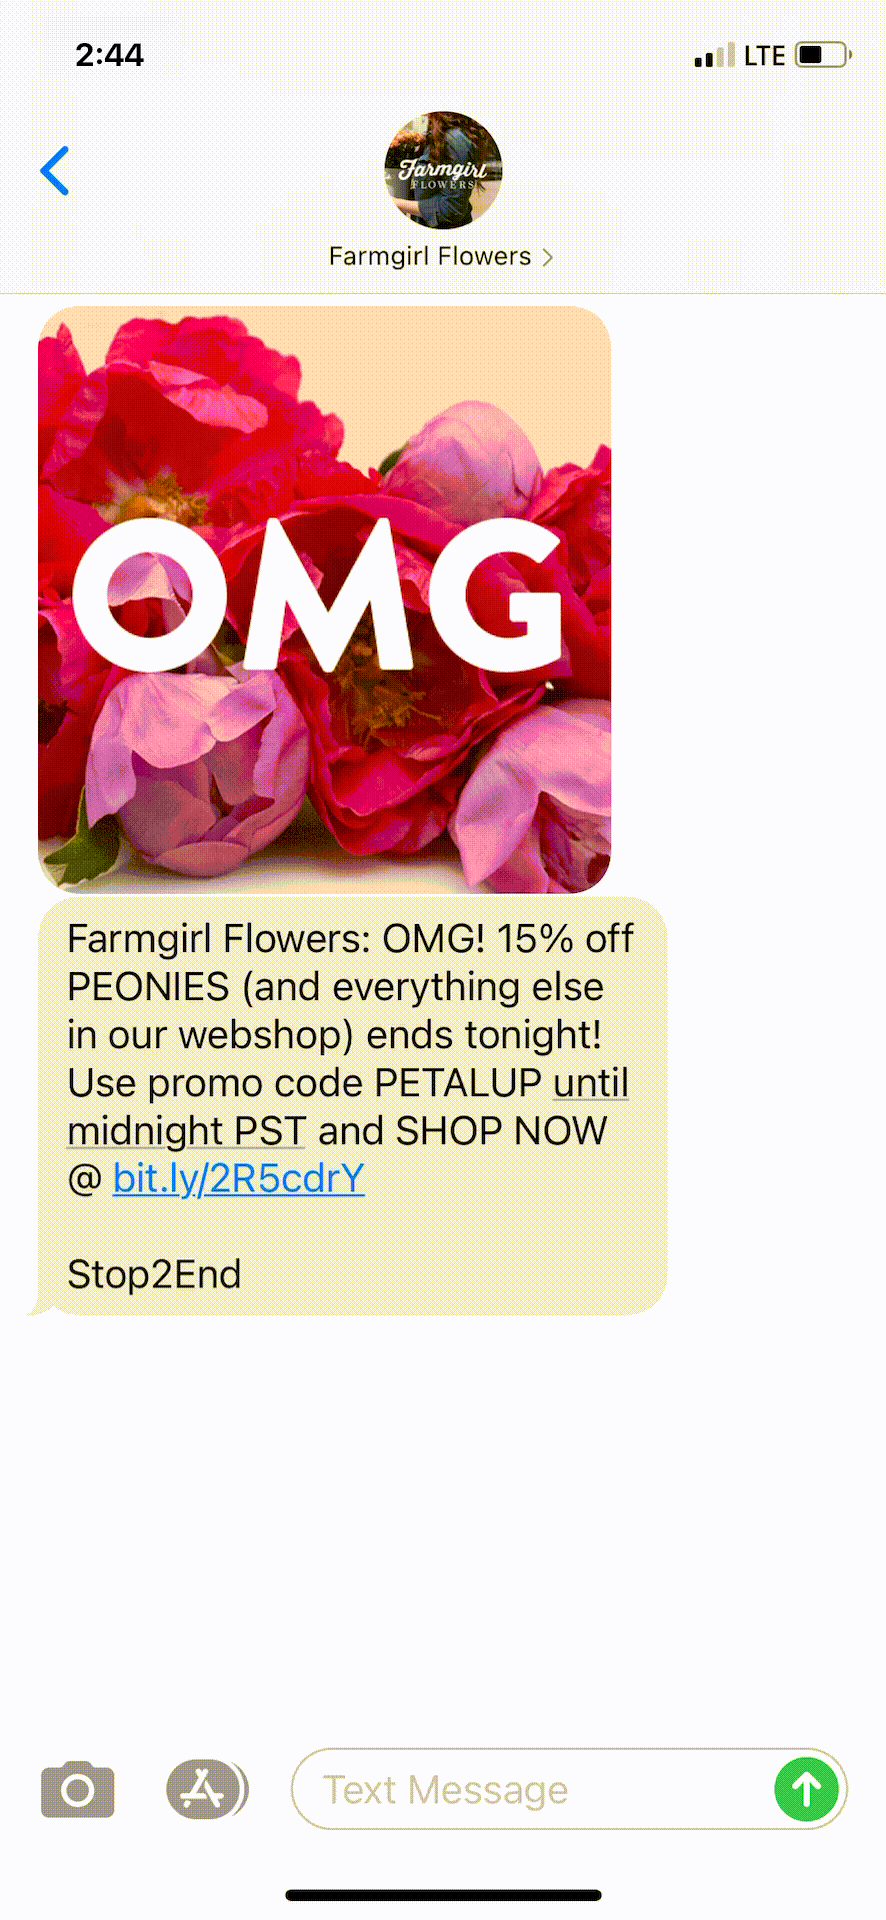 Farmgirl-Flowers-Text-Message-Marketing-Example-05.11.2021